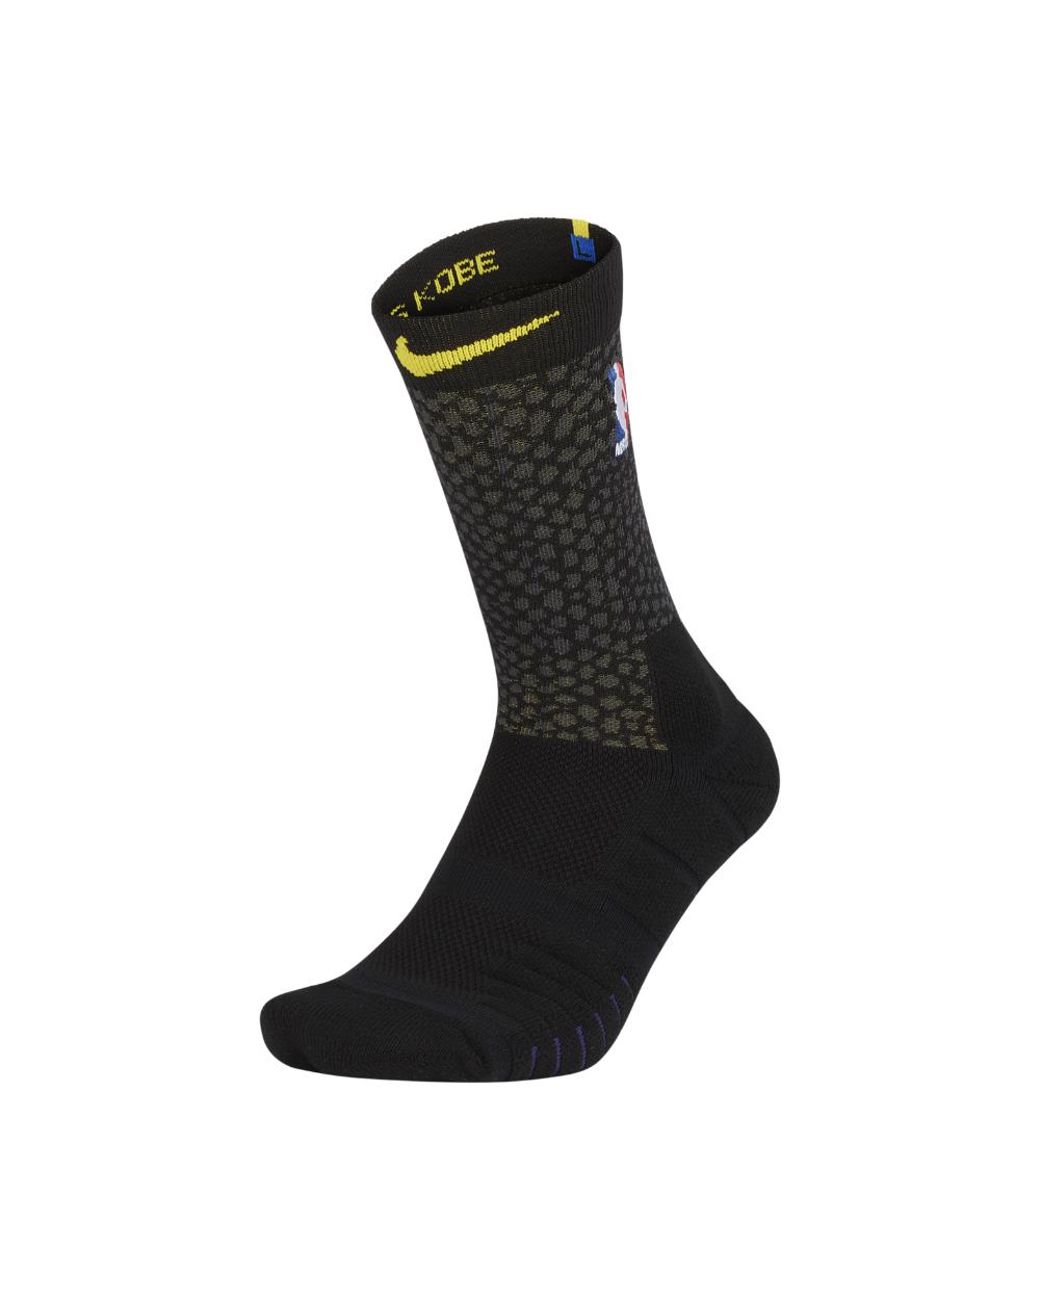 Nike Los Angeles Lakers City Edition Elite Quick Nba Crew Socks in